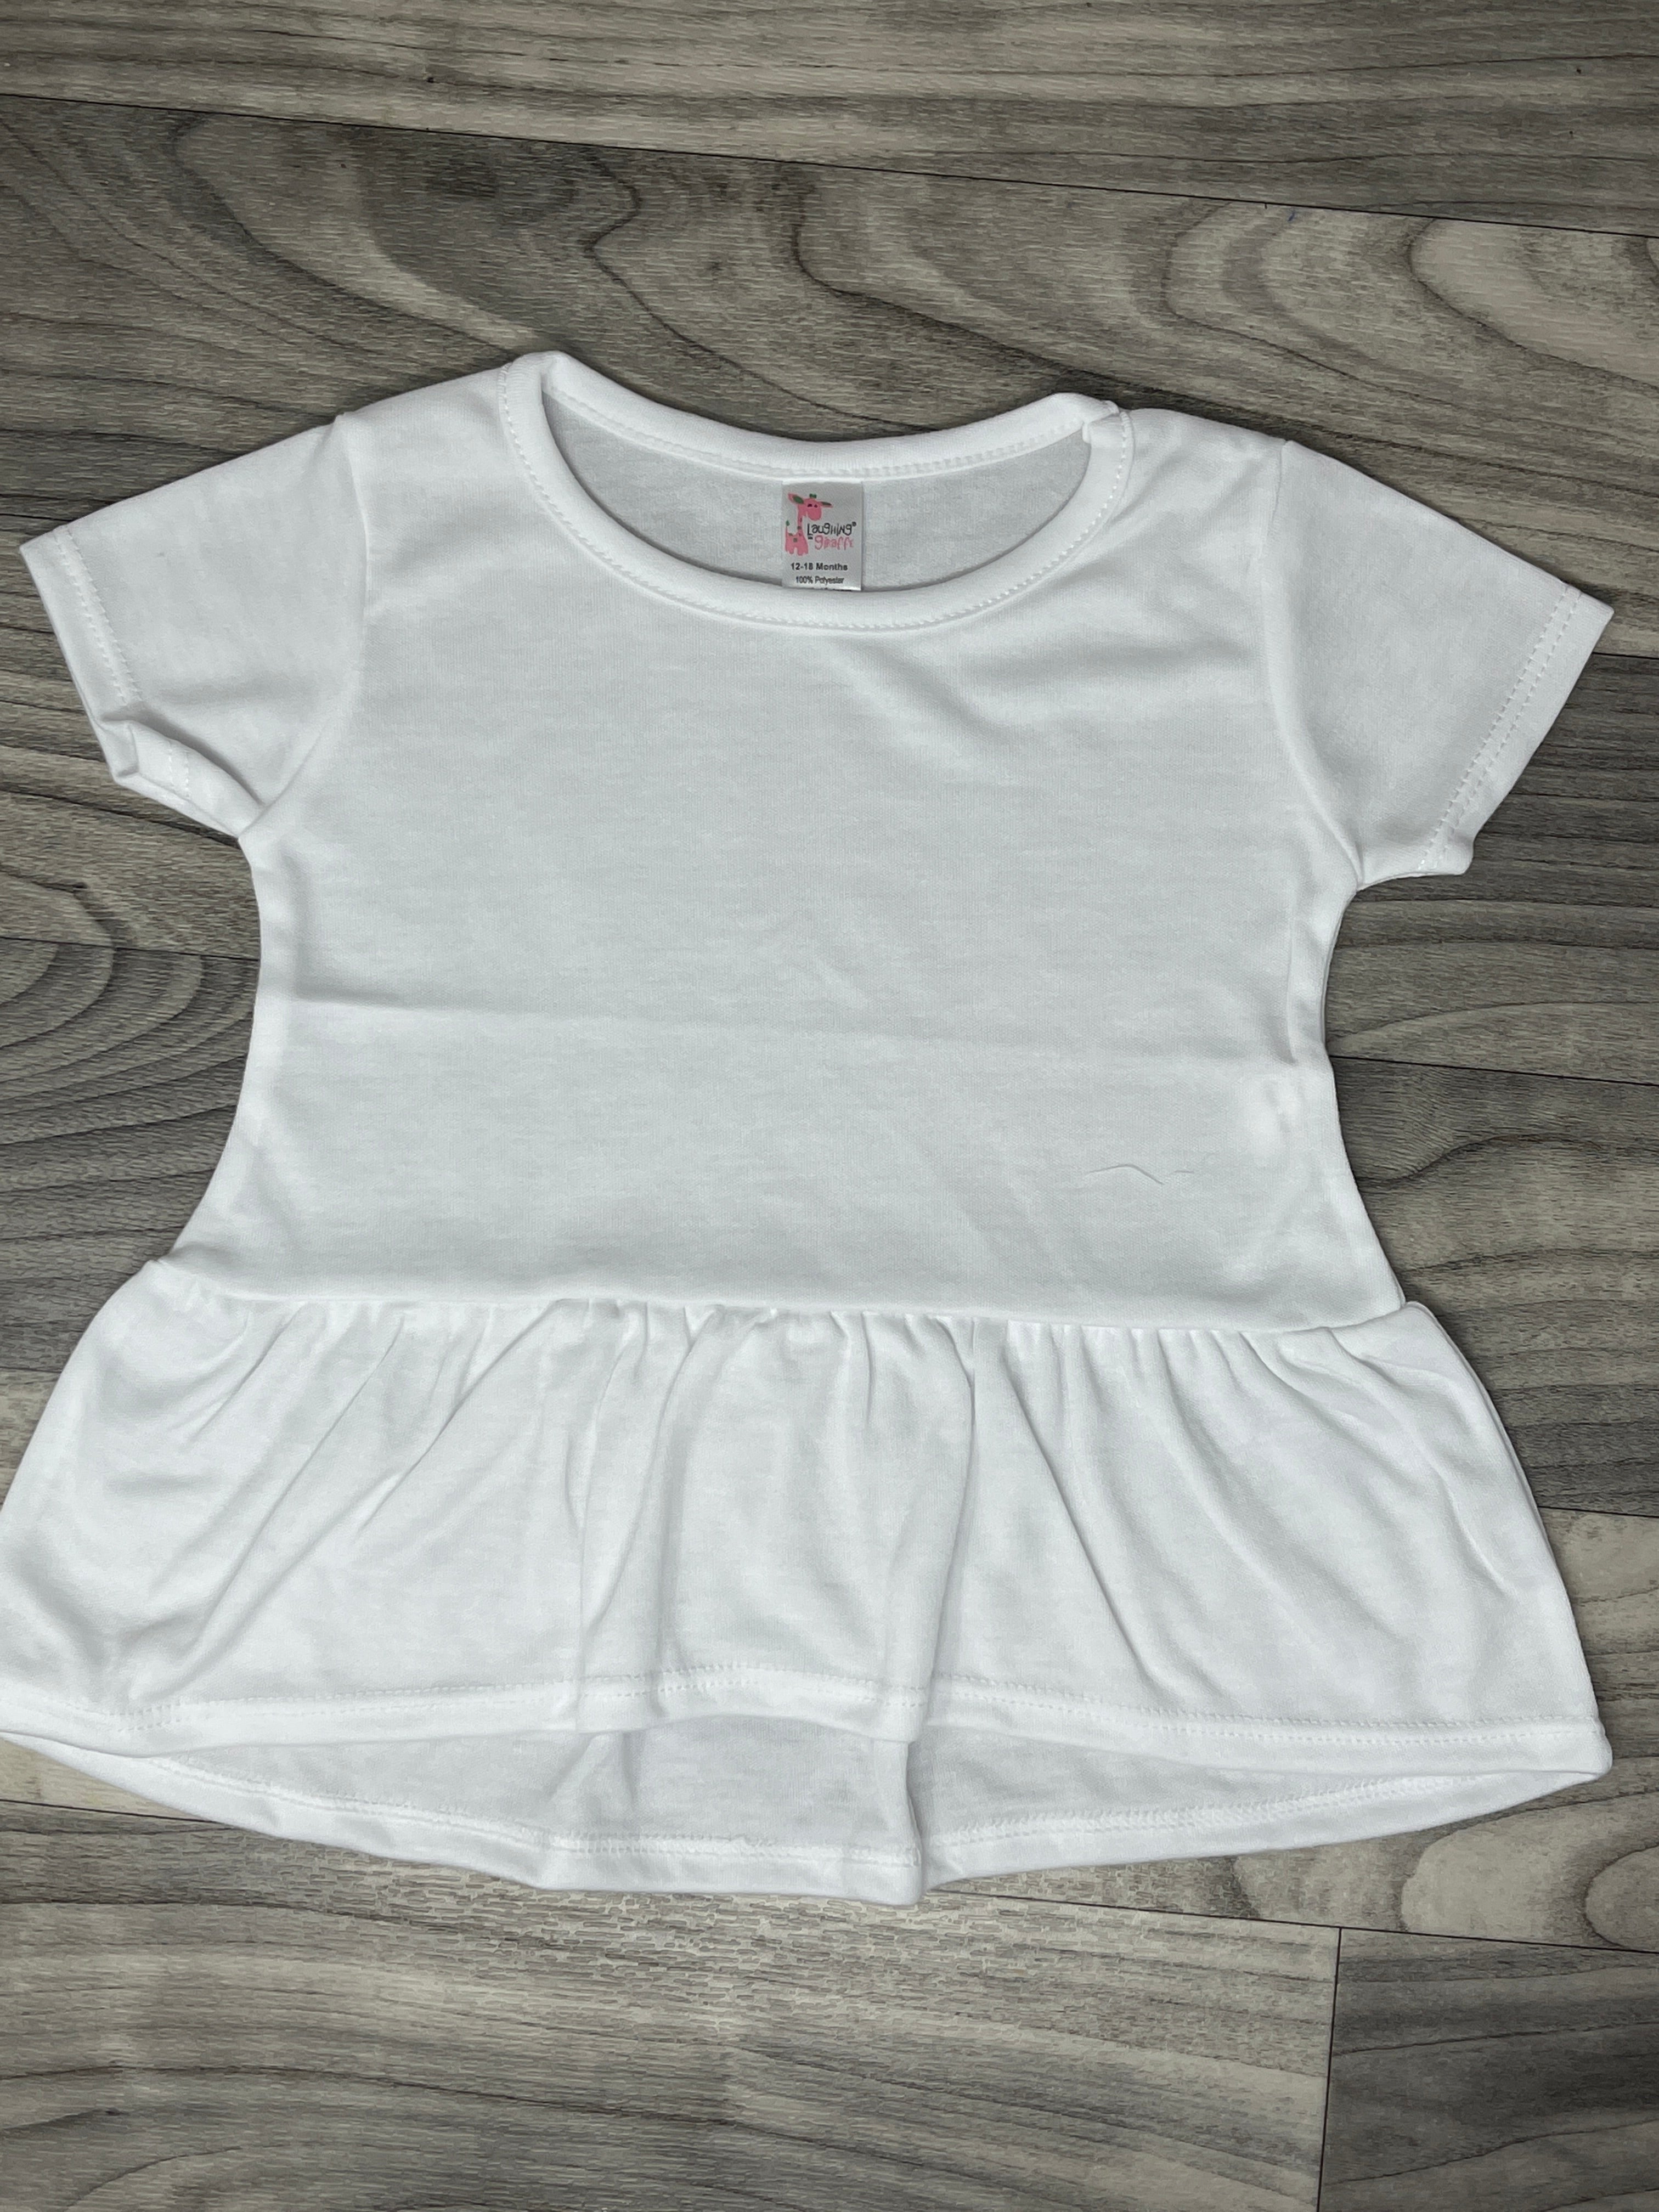 Baby Girls short sleeve Peplum top Personalized